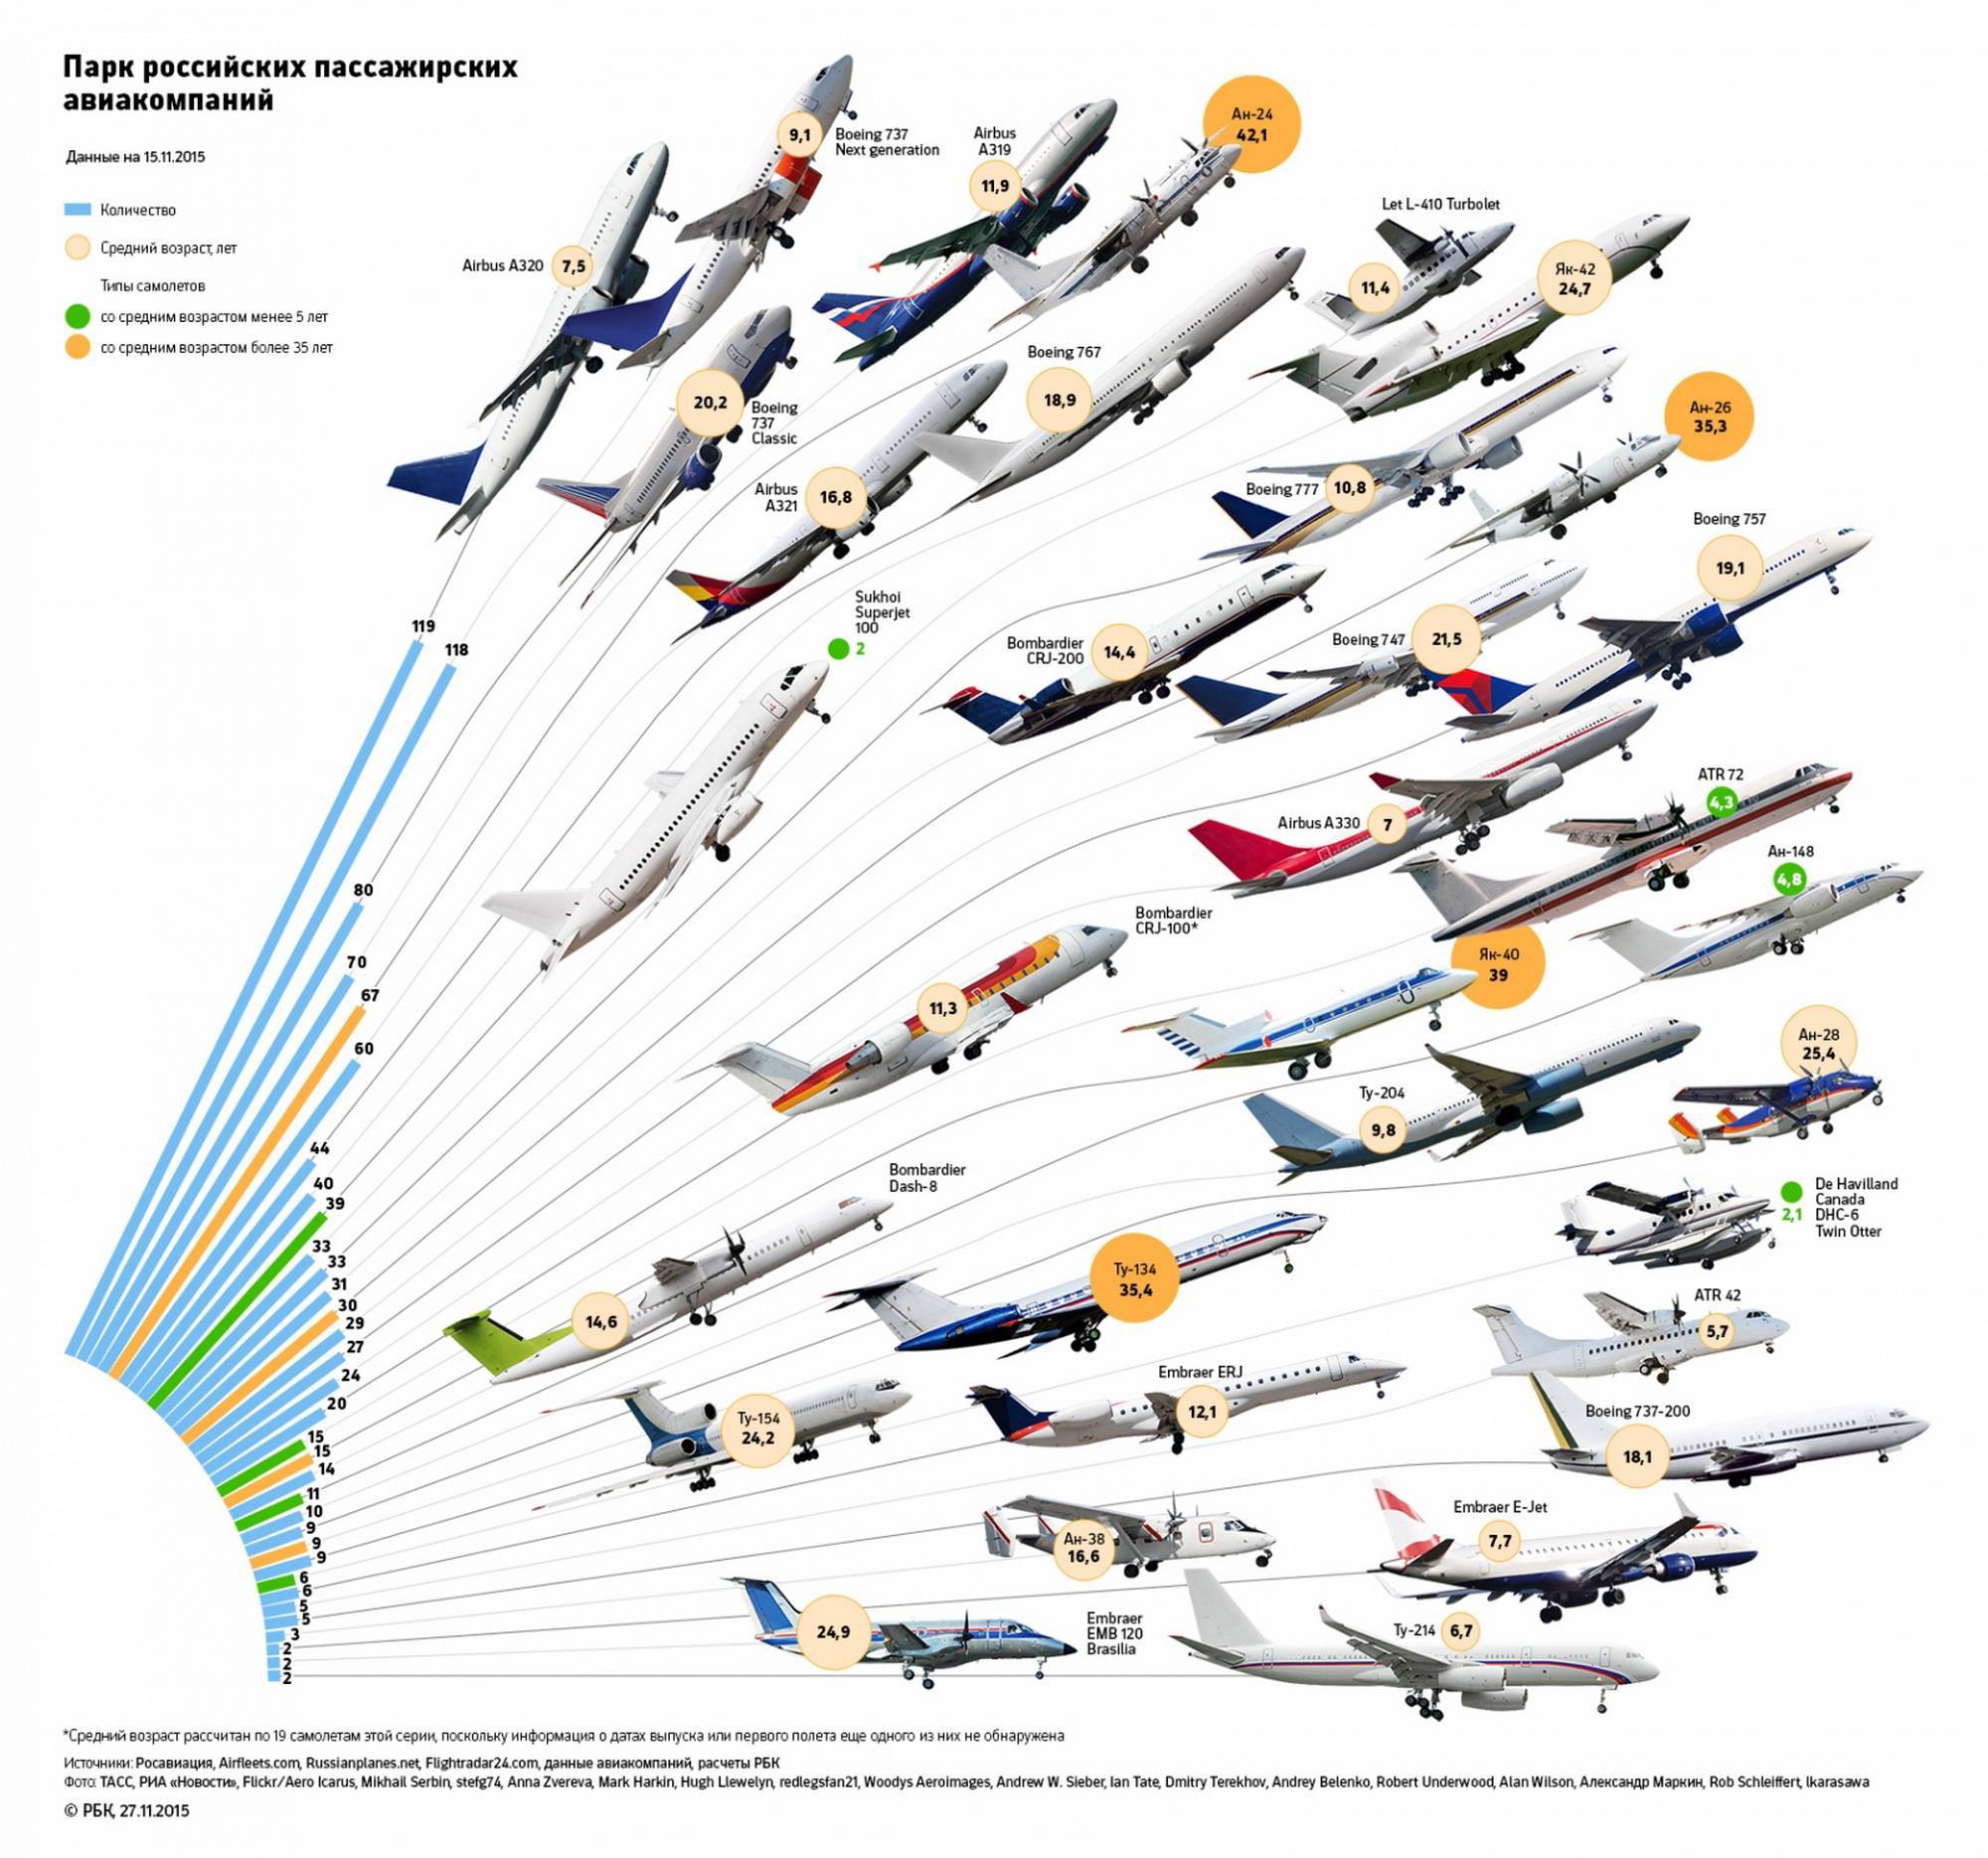 Авиапарк аэрофлота: возраст и характеристики самолетов